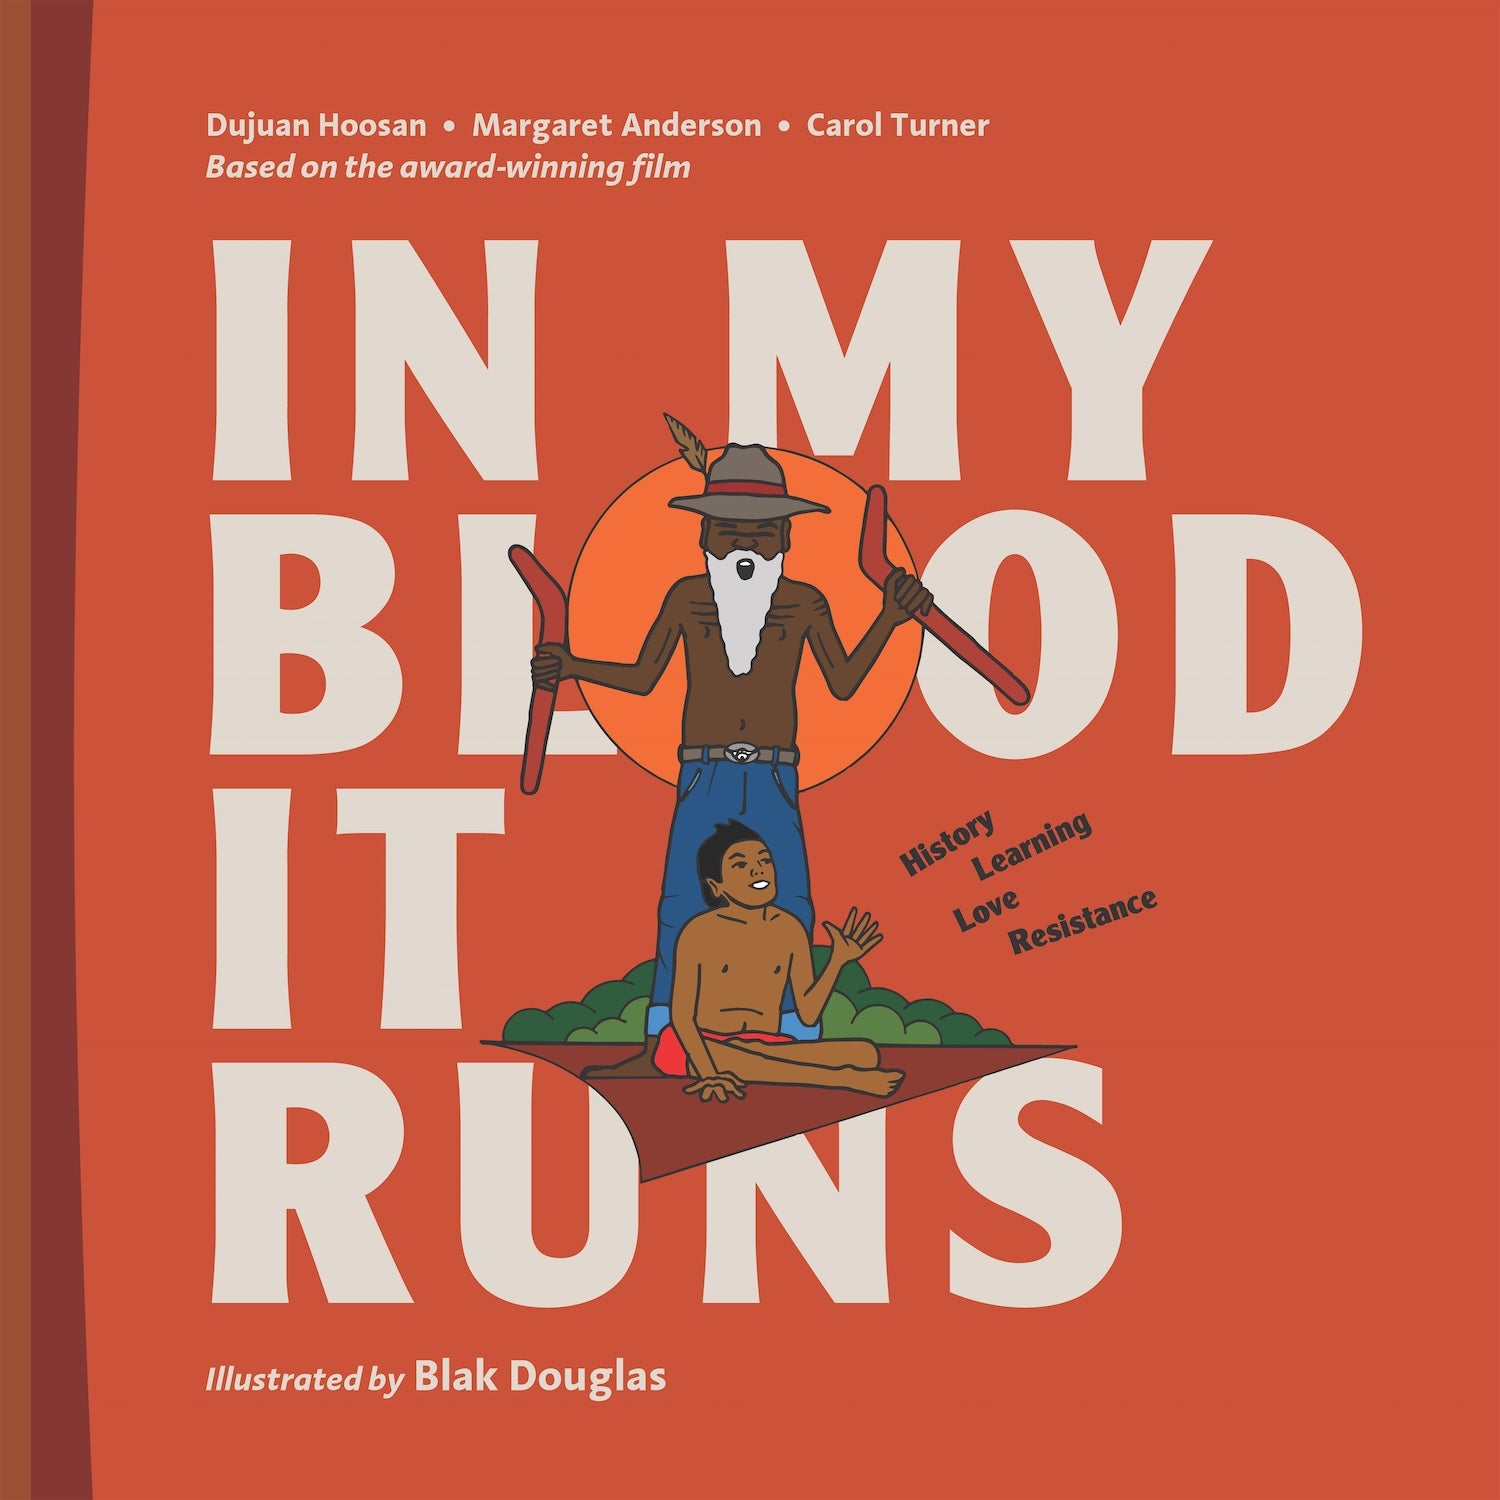 In My Blood It Runs: History. Learning. Love. Resistance by Dujuan Hoosan, Margaret Anderson, Carol Turner